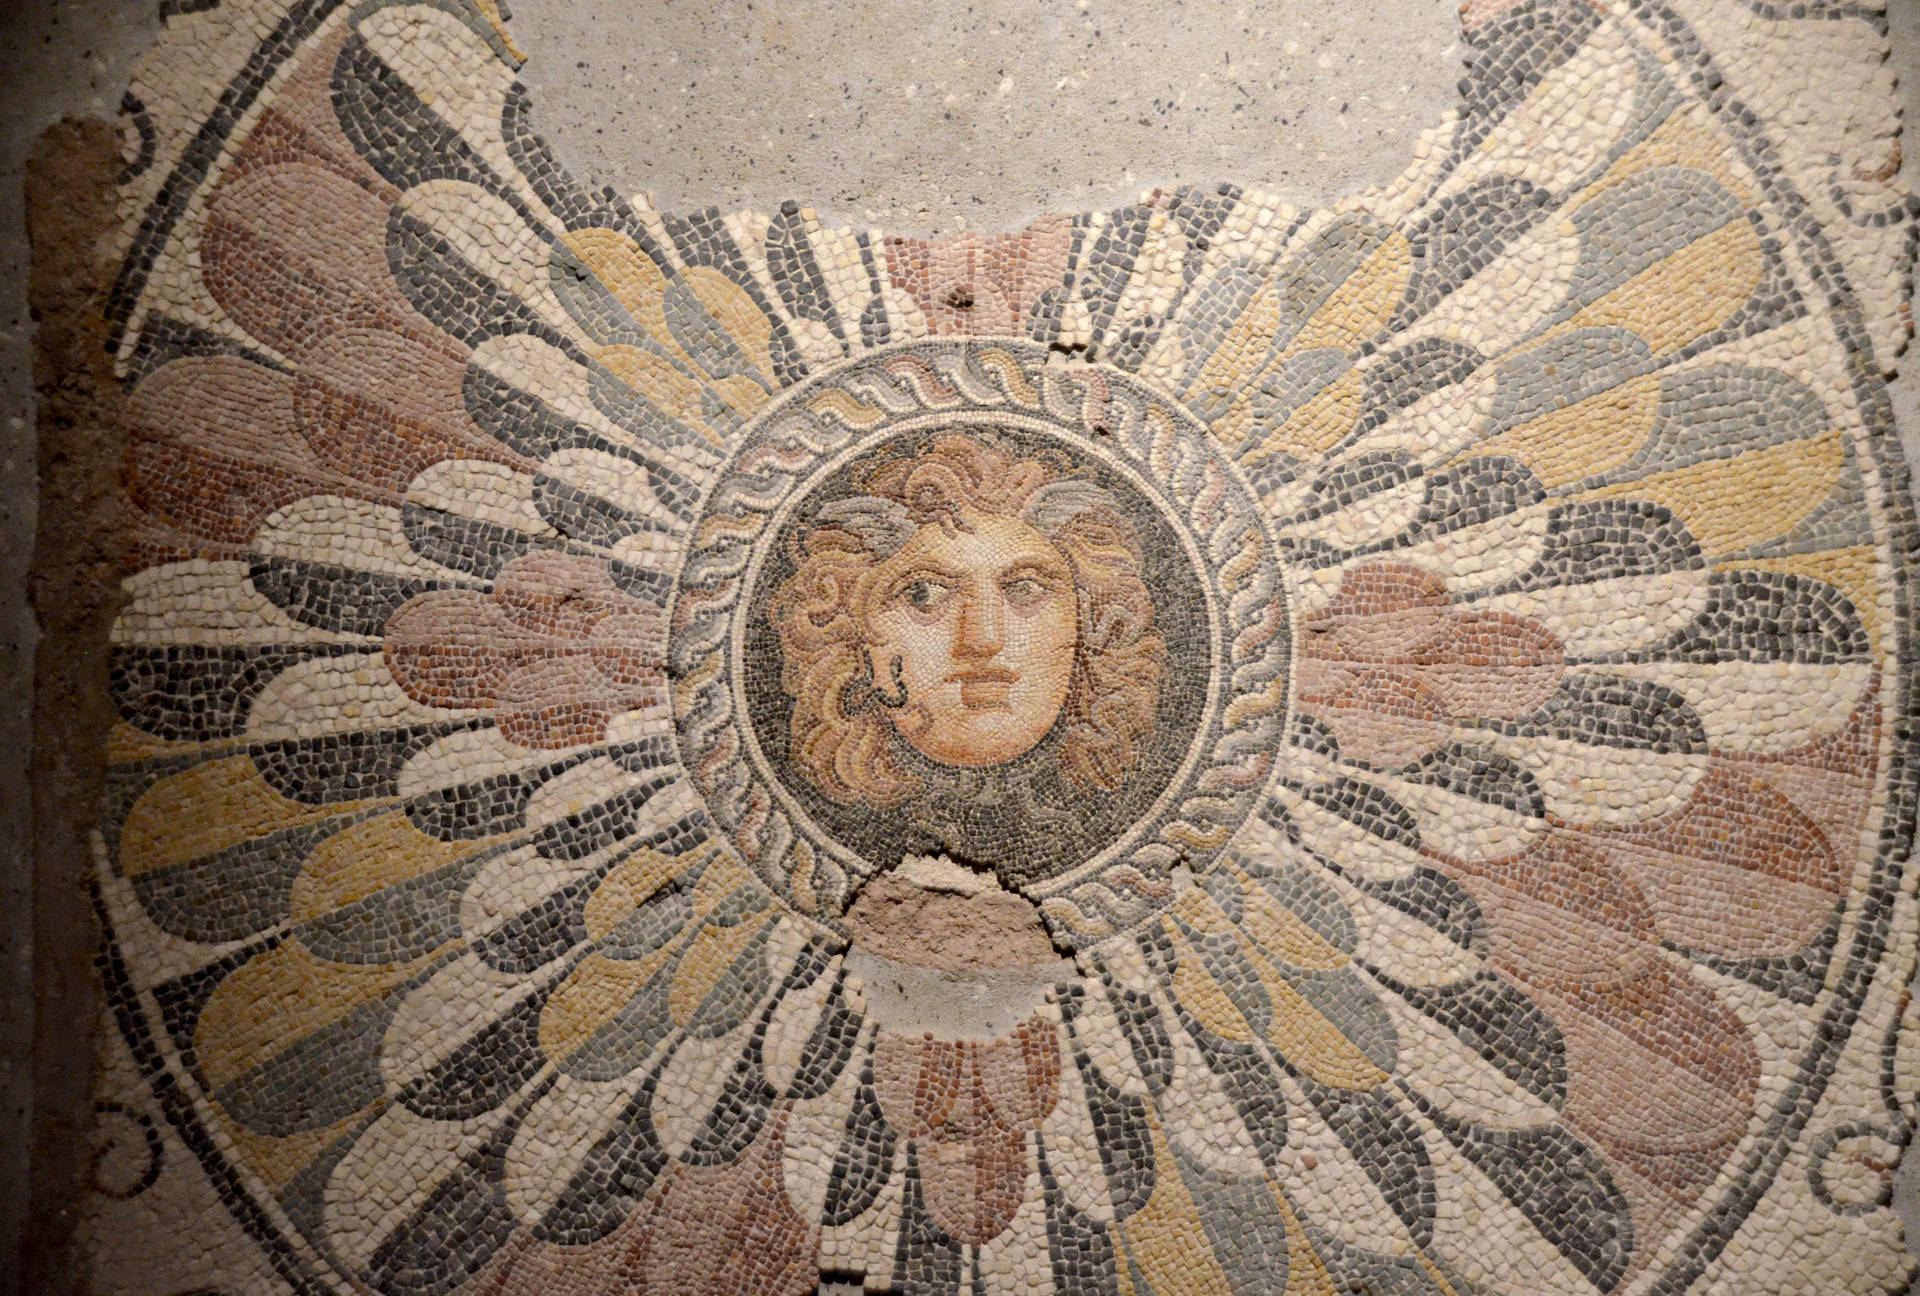 Intricate Medusa Mosaic in Alexandria Wallpaper